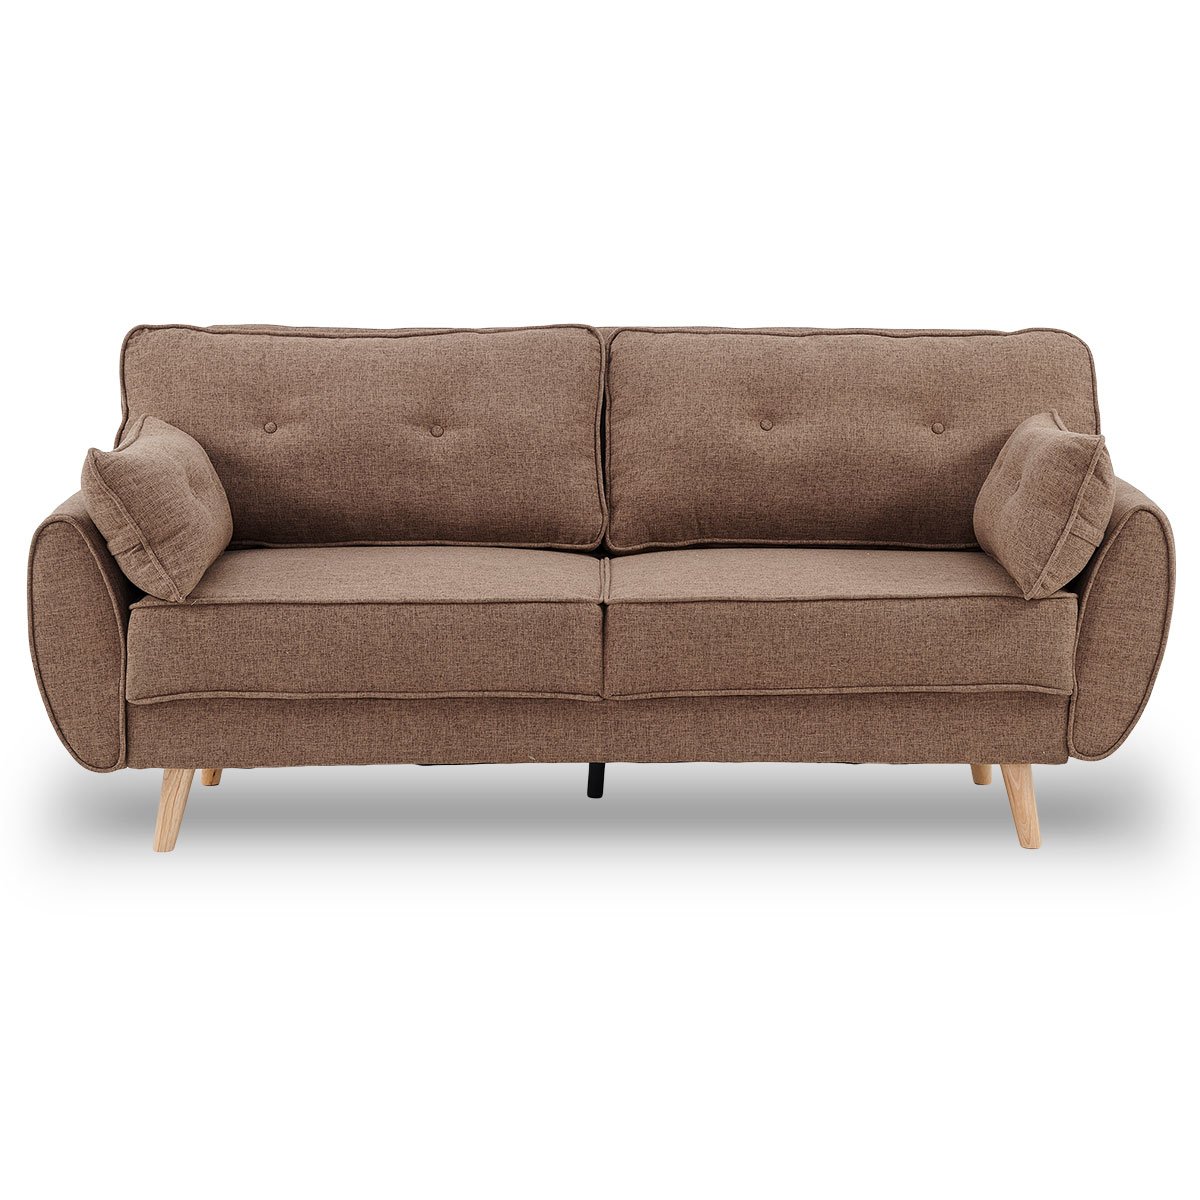 Sarantino 3 Seater Modular Linen Fabric Sofa Bed Couch Futon - Brown 1